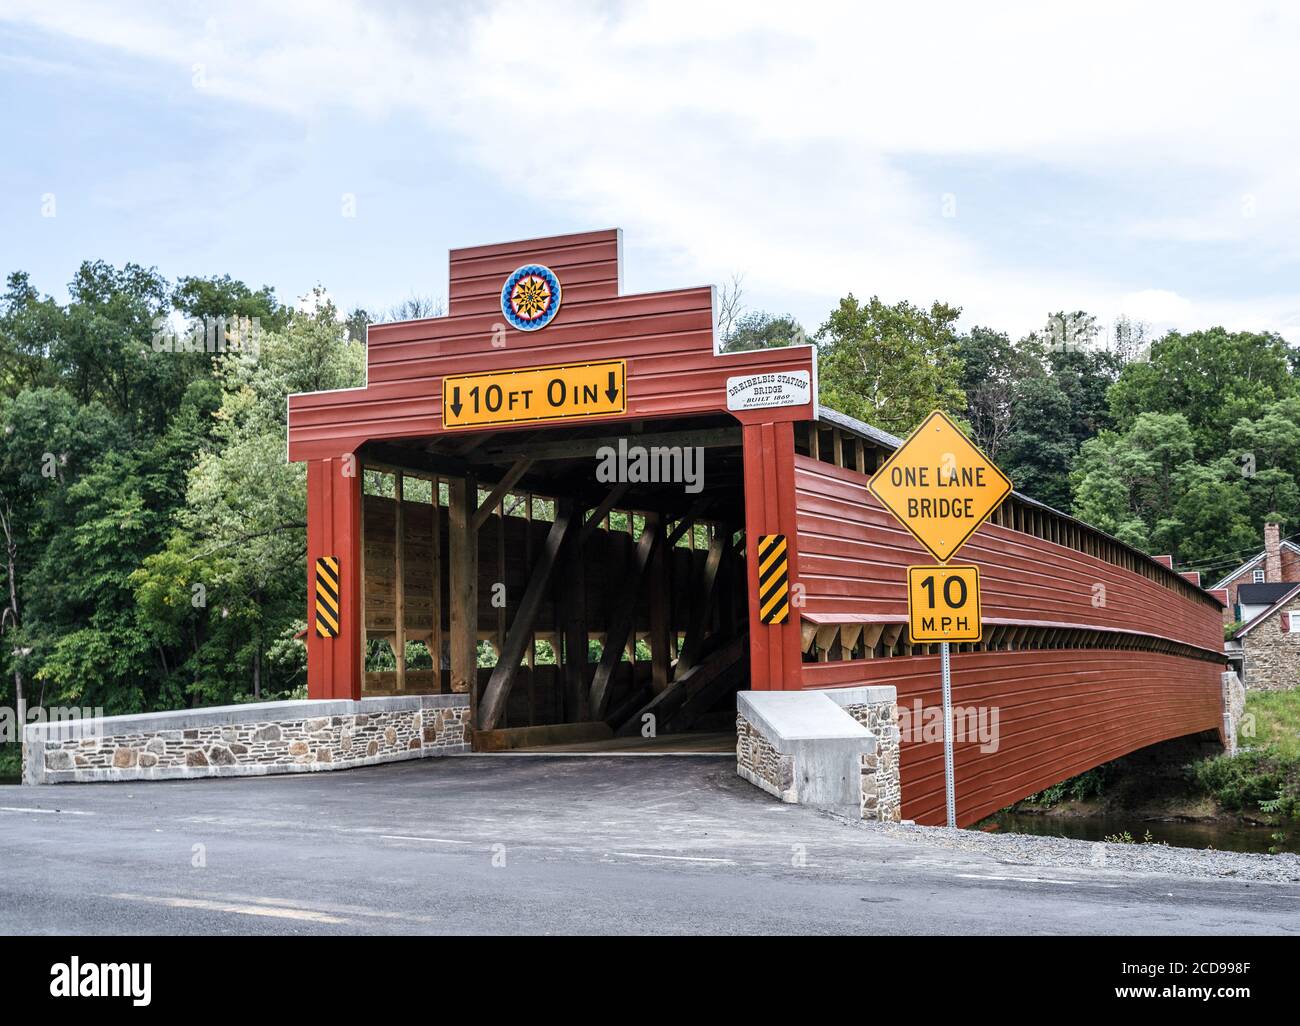 Dreibelbis Station Covered Bridge, wooden covered bridge over Maiden Creek in Berks County, Pennsylvania. Stock Photo